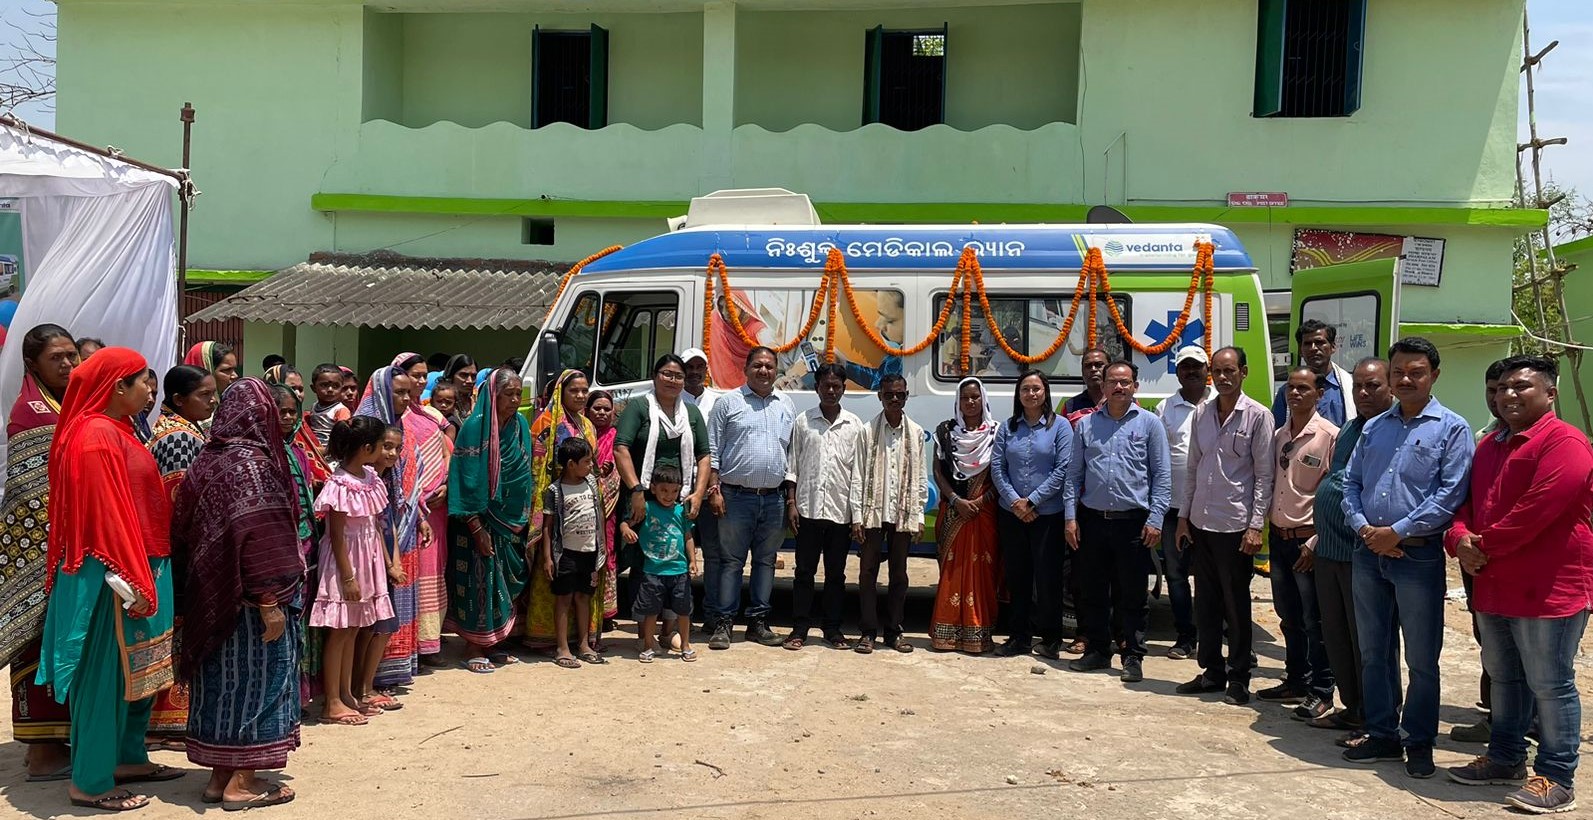 Vedanta Aluminium expands free mobile healthcare services to more locations in Sundargarh